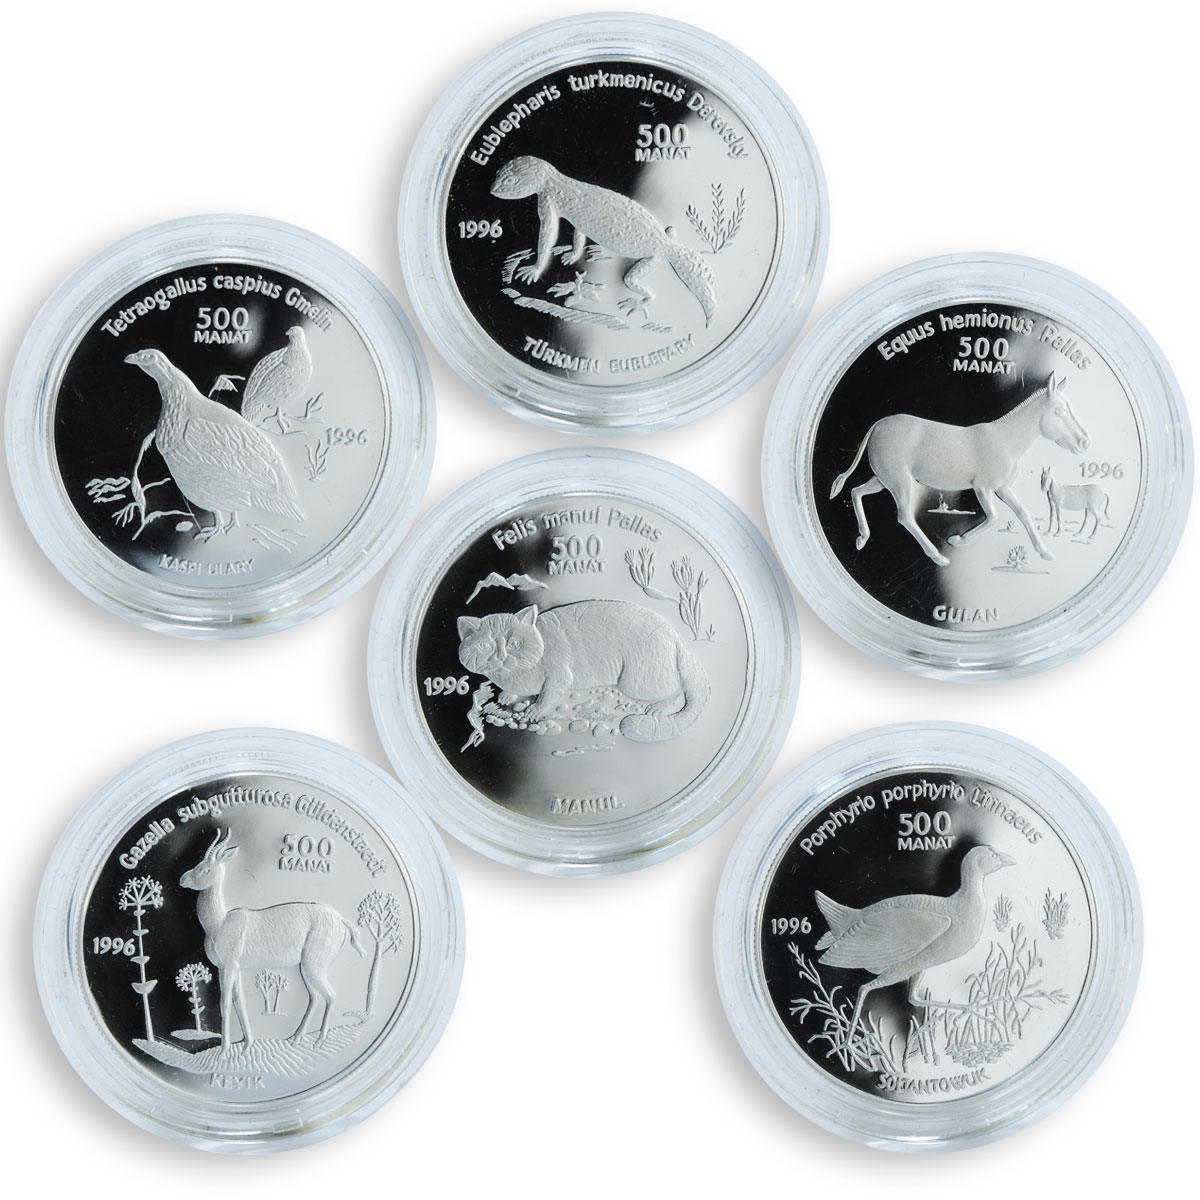 Turkmenistan set of 6 coins 500 manat Endangered wild animals silver proof 1996